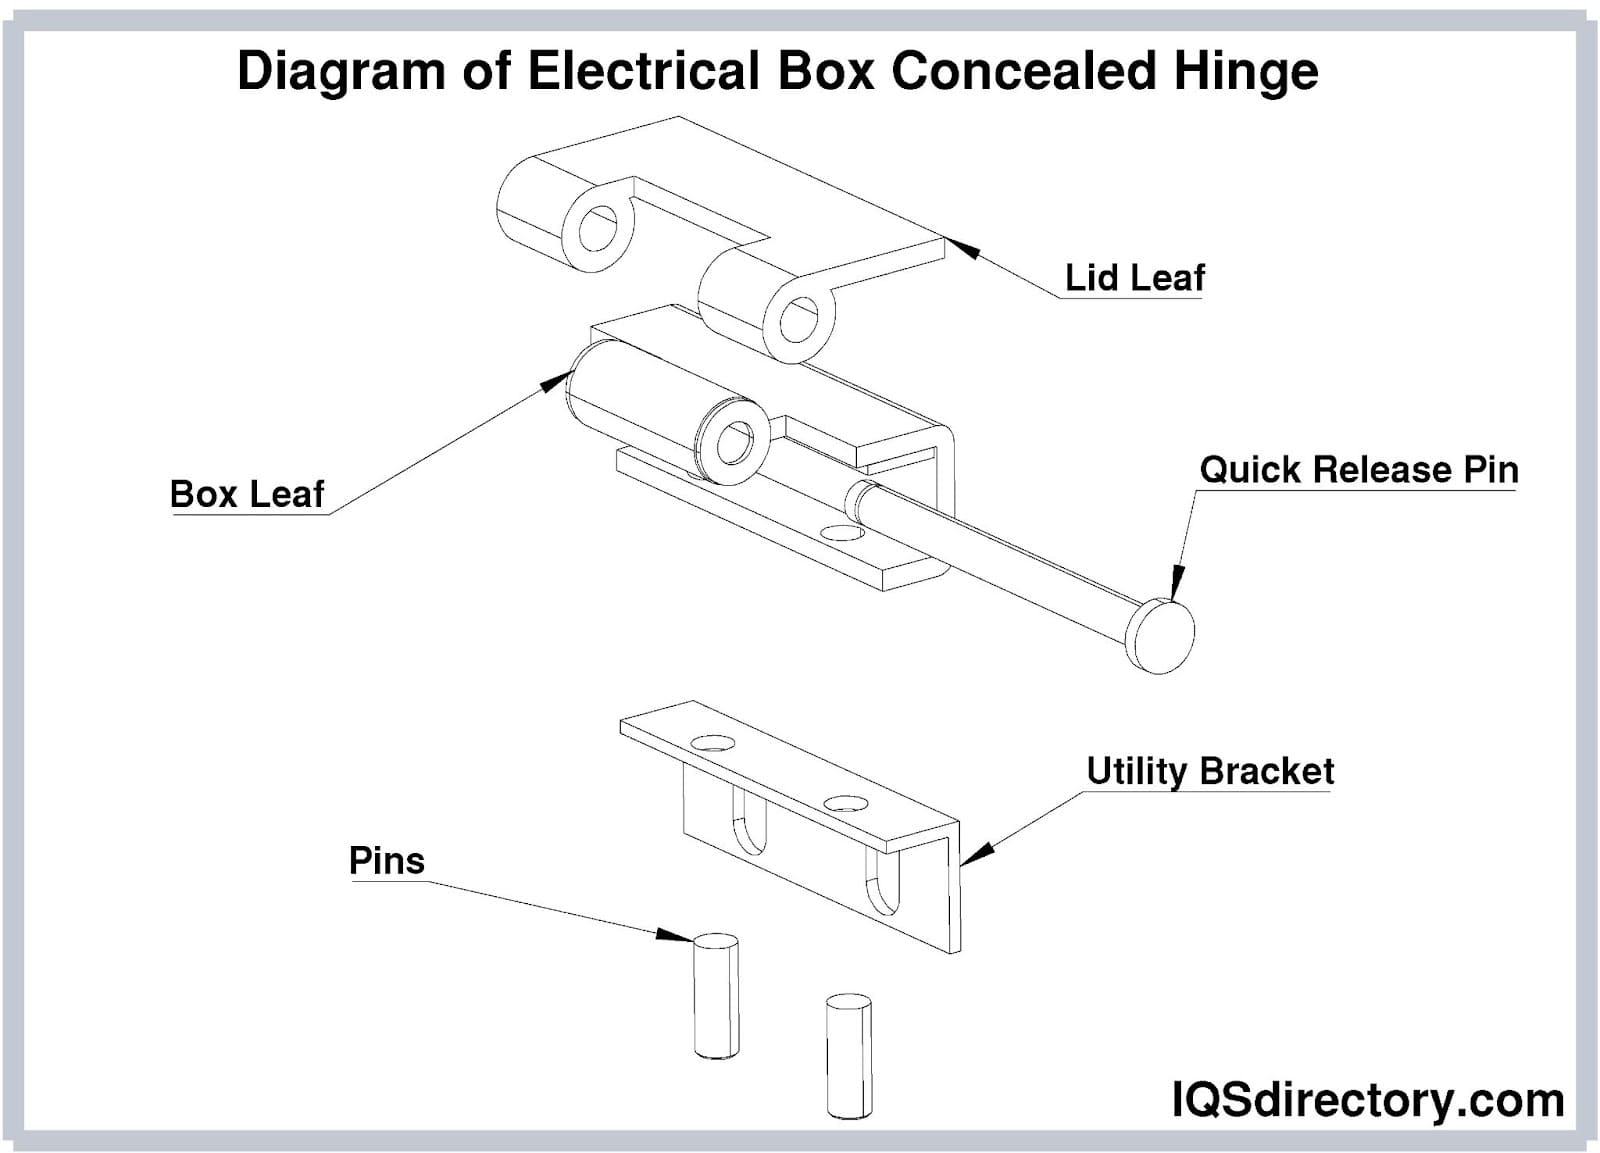 Diagram of Electrical Box Concealed Hinge